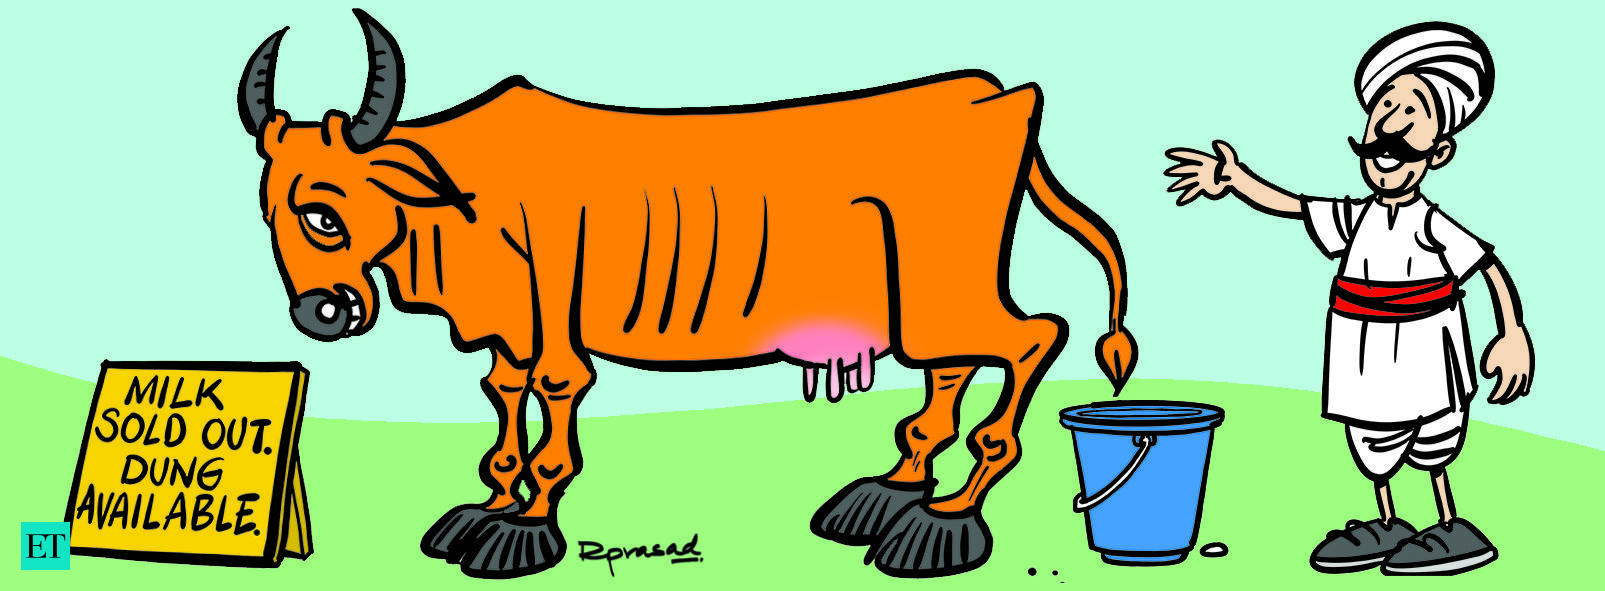 godhan nyay banks: Chhattisgarh's Godhan Nyay banks on dung to push cow  economy - The Economic Times